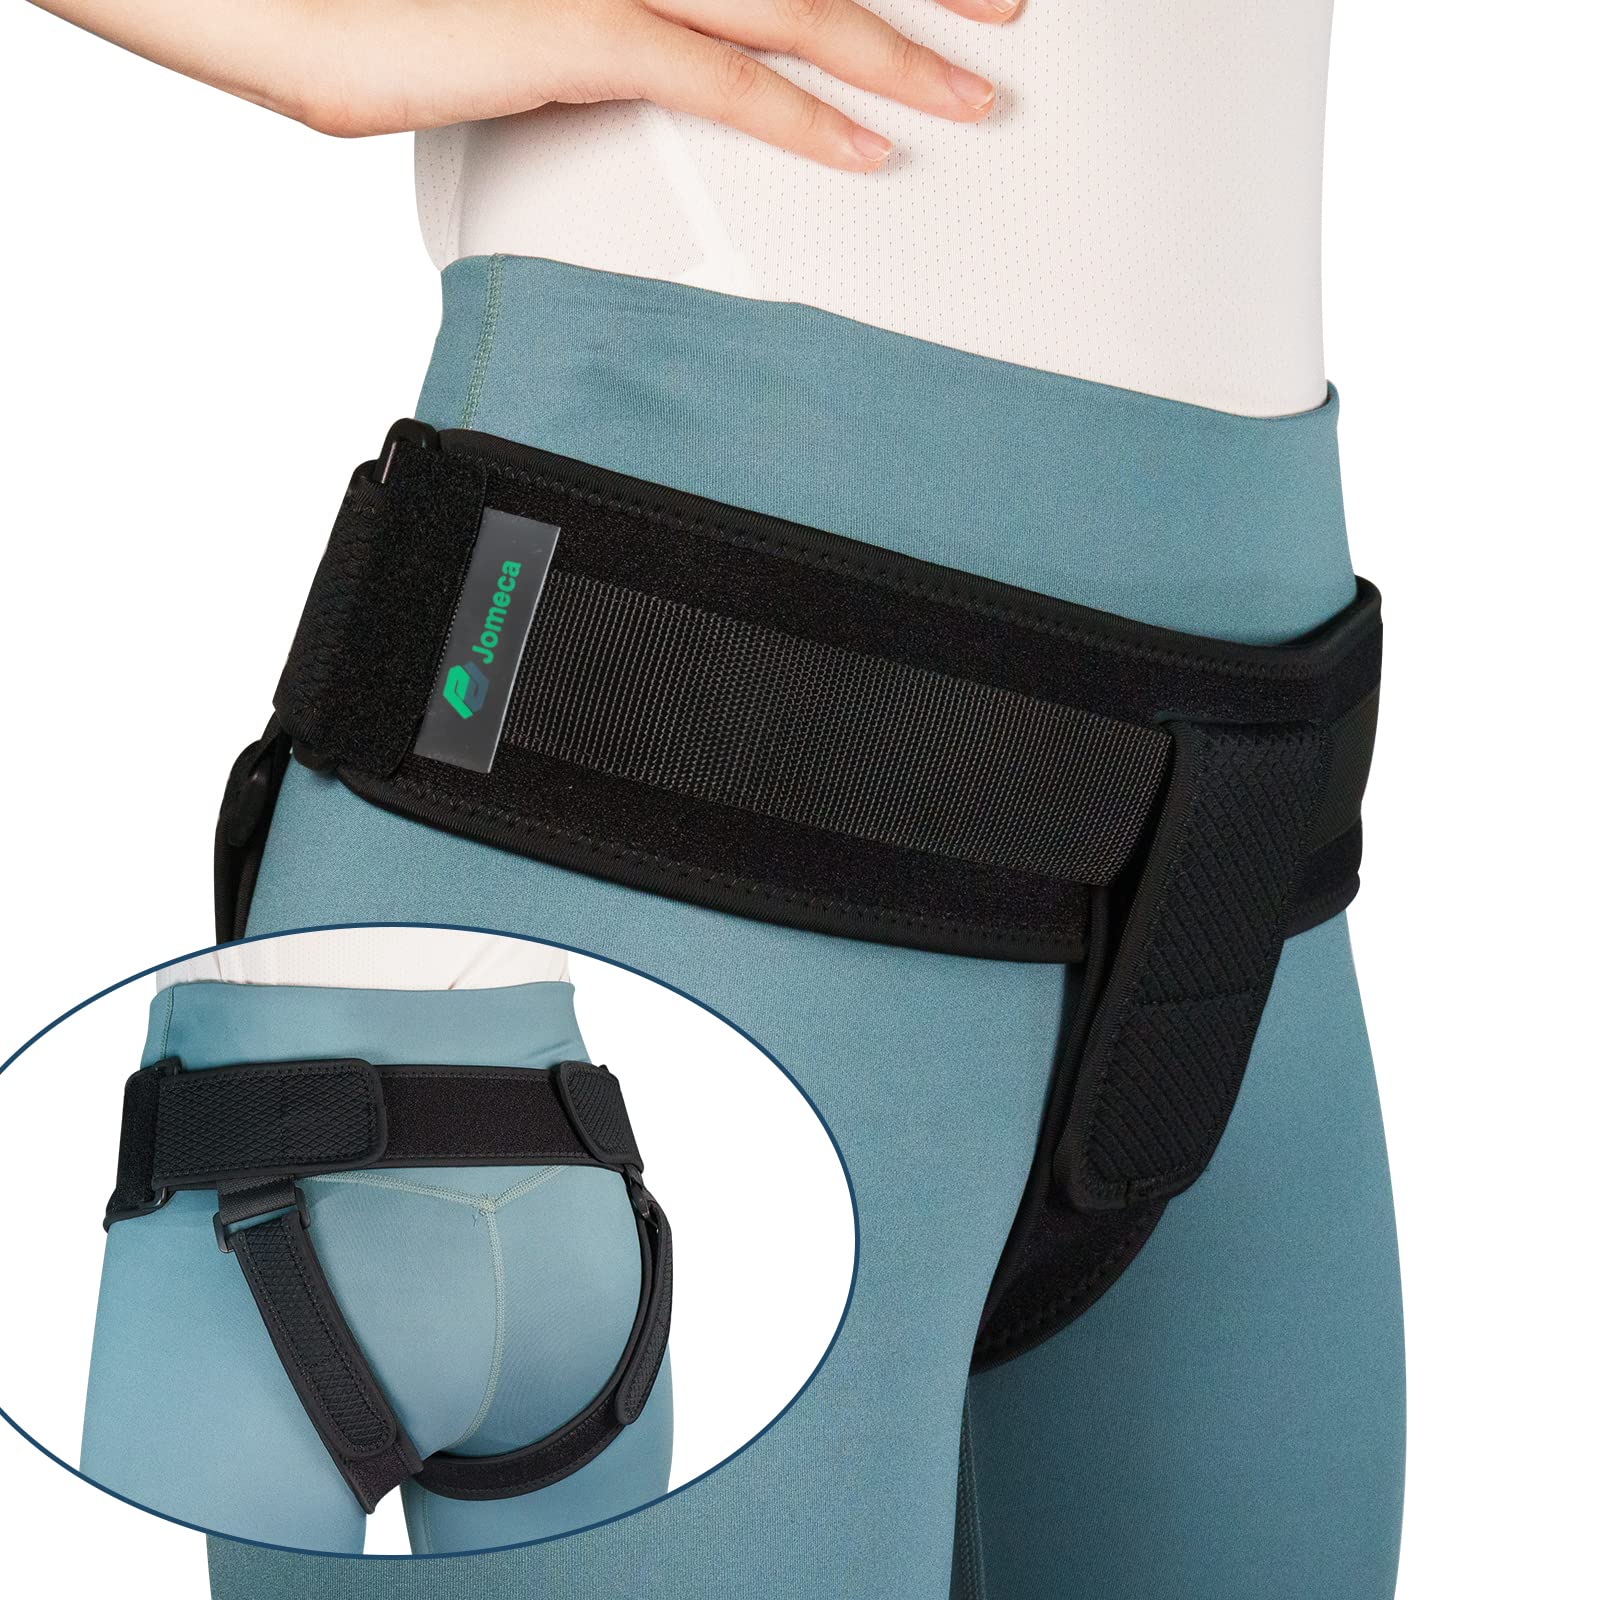 Pelvic Support Belts for Pelvic Organ Prolapse